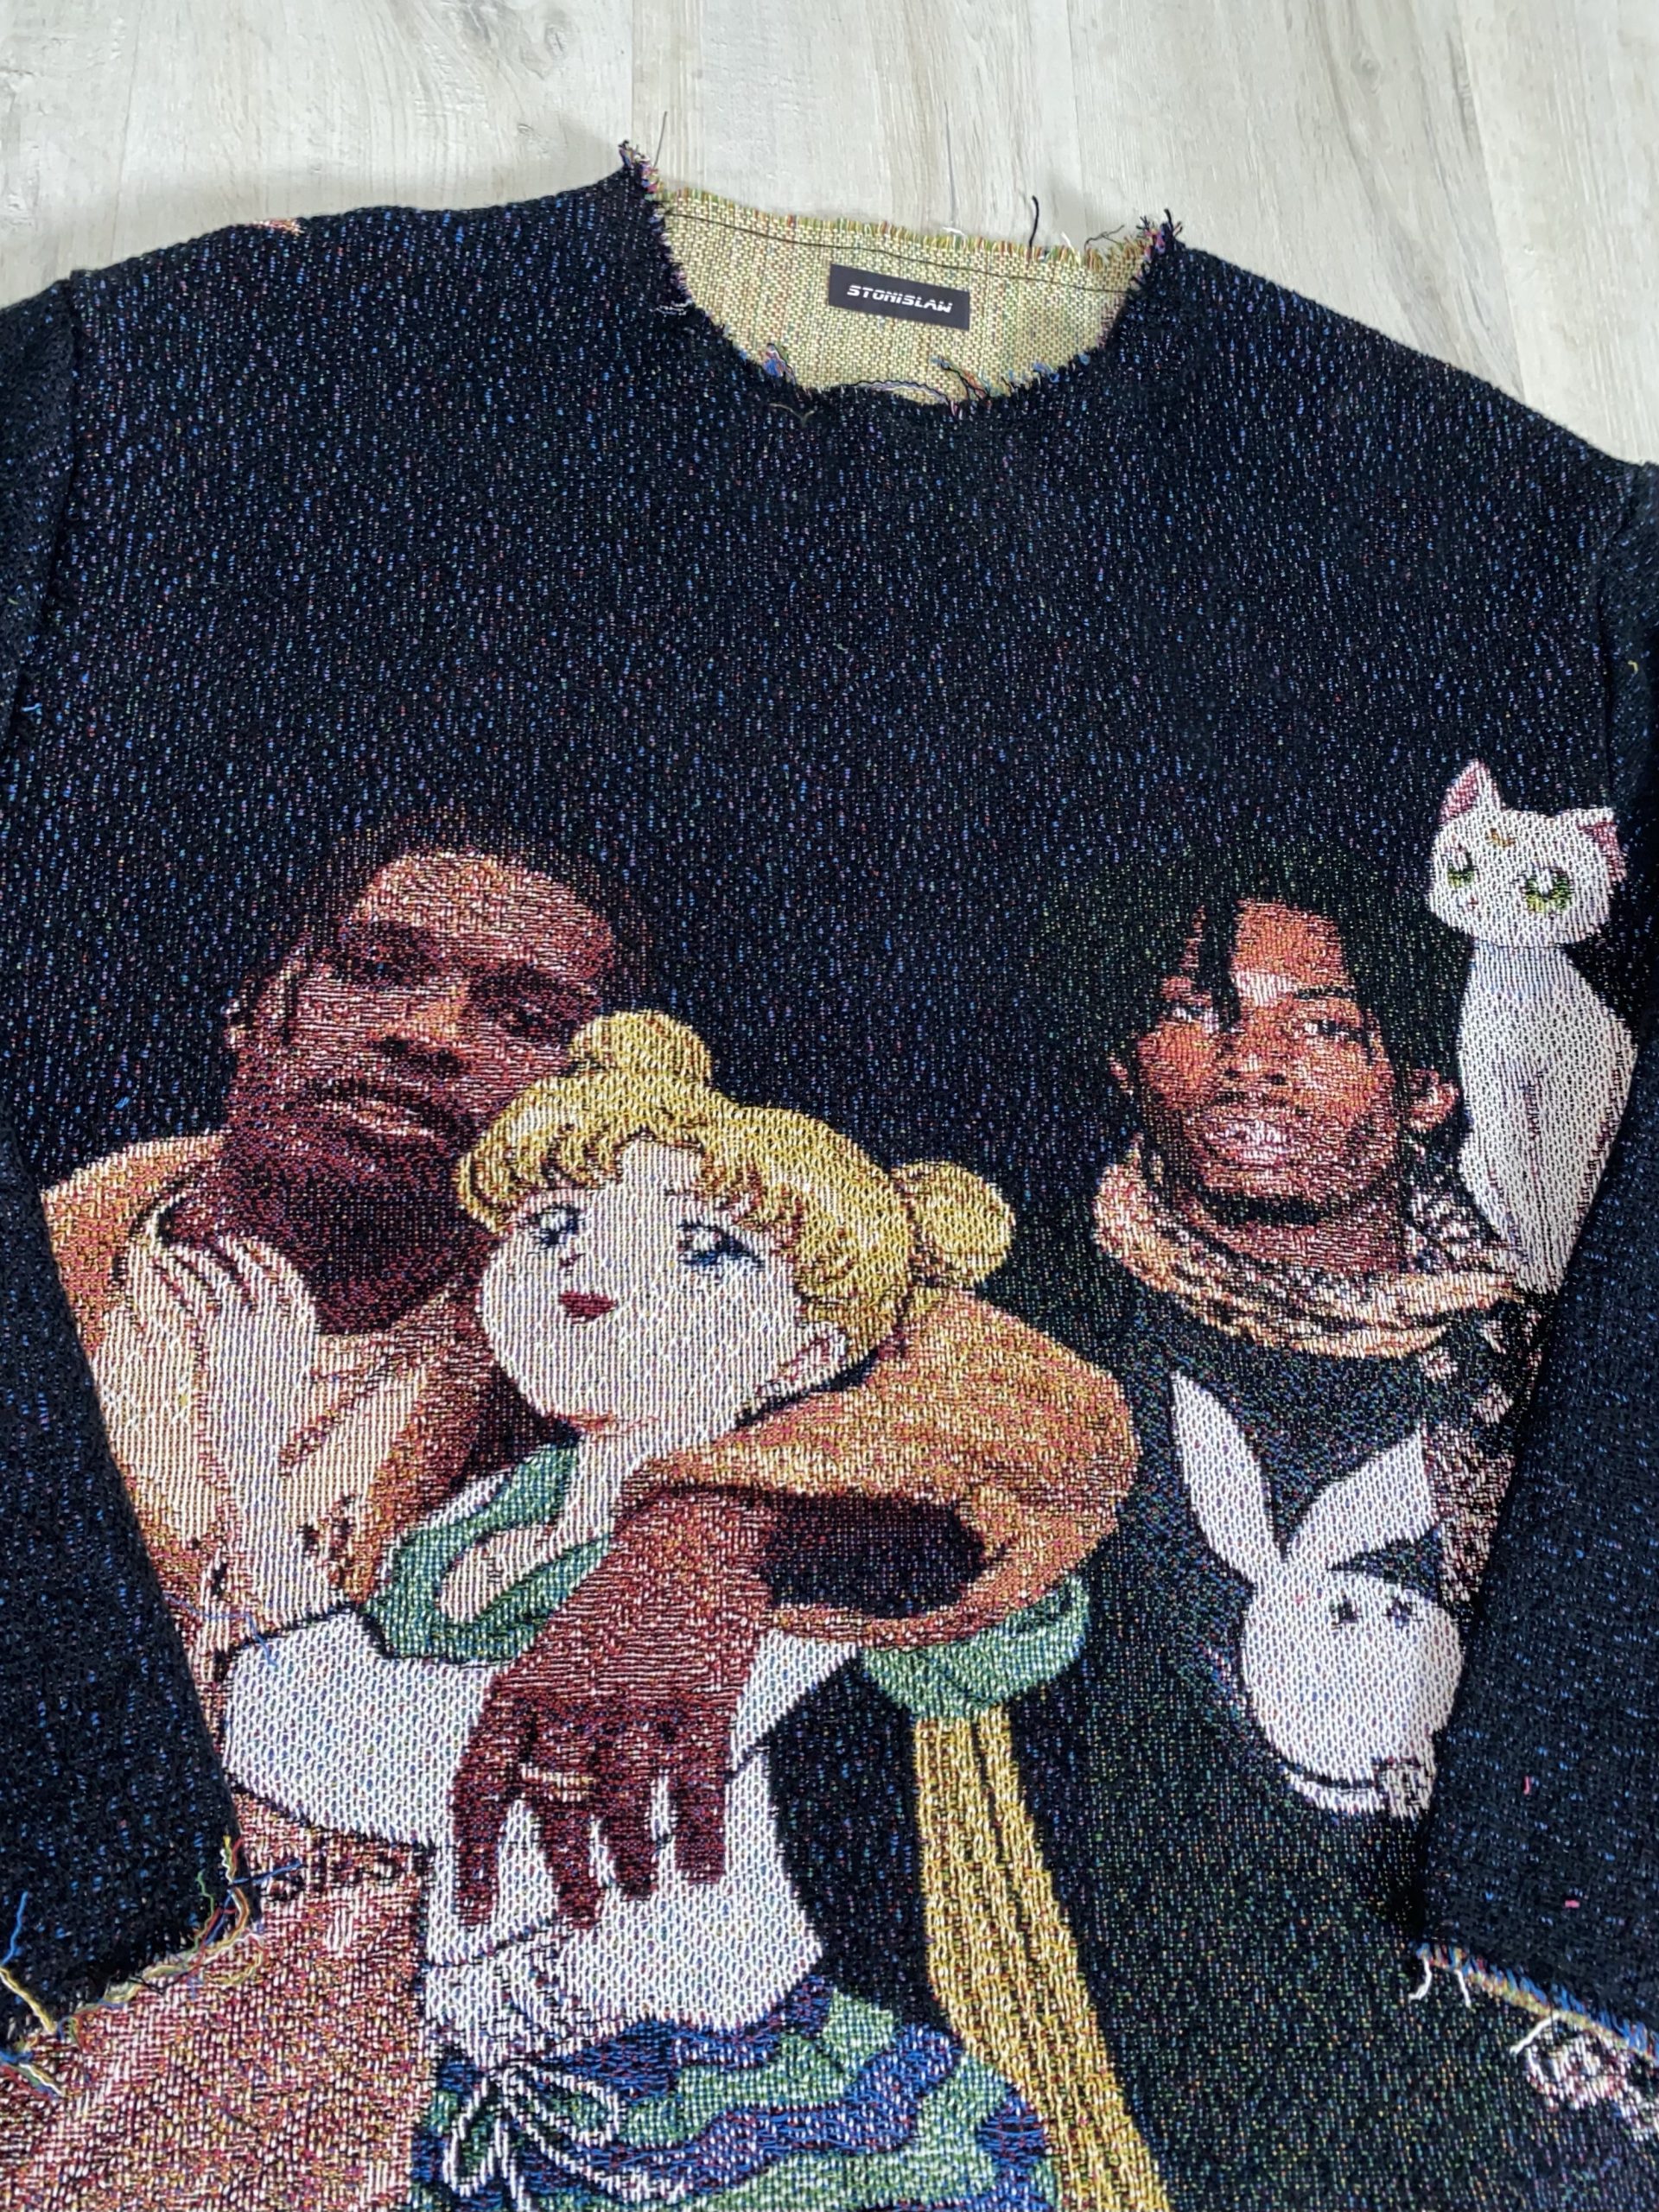 anime tapestry sweatshirt travis scott playboi carti10 scaled